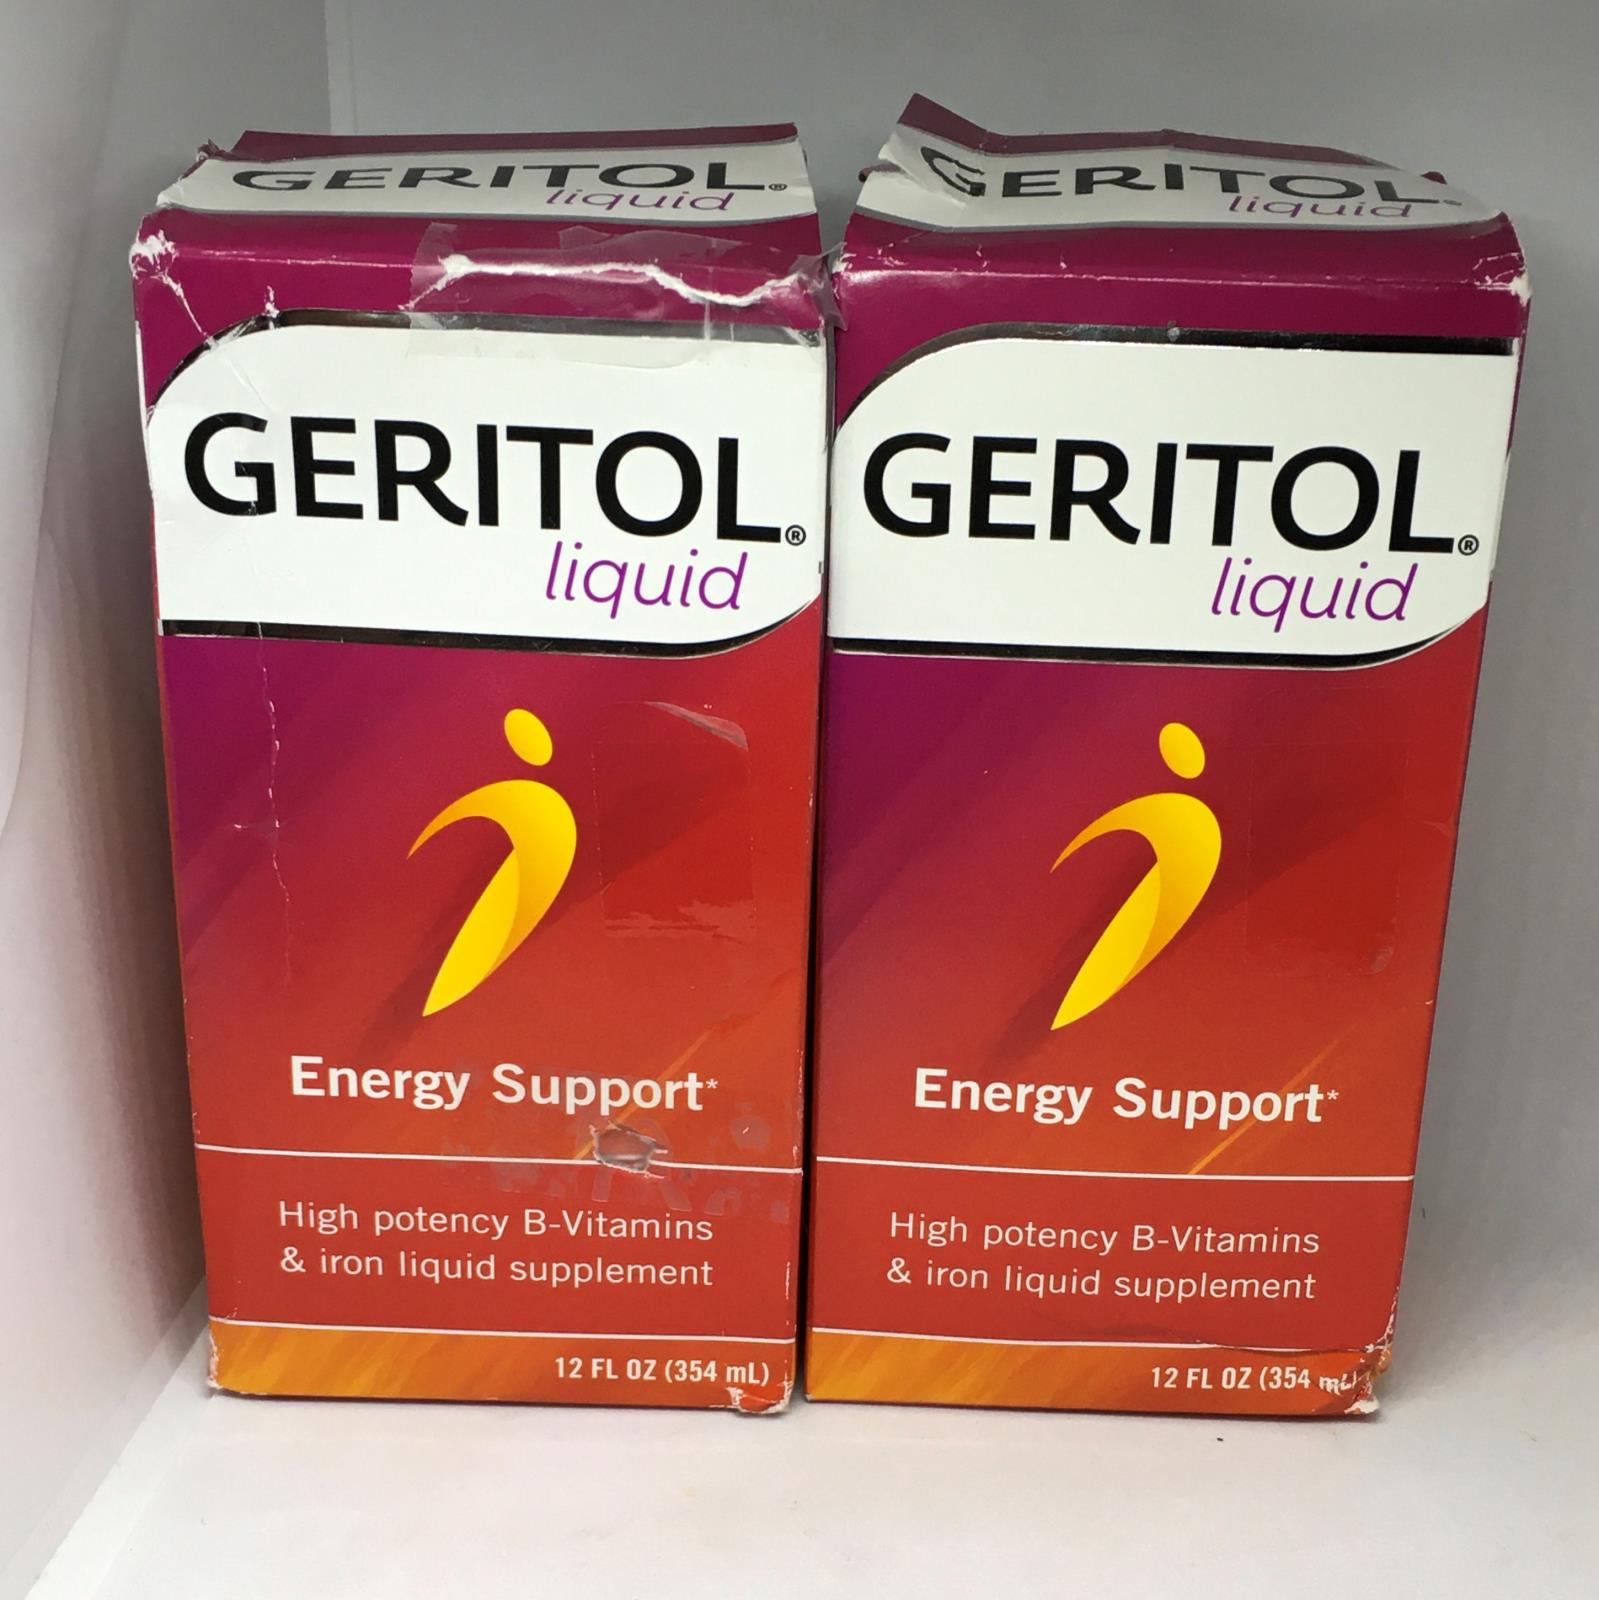 geritol liquid vs sss tonic